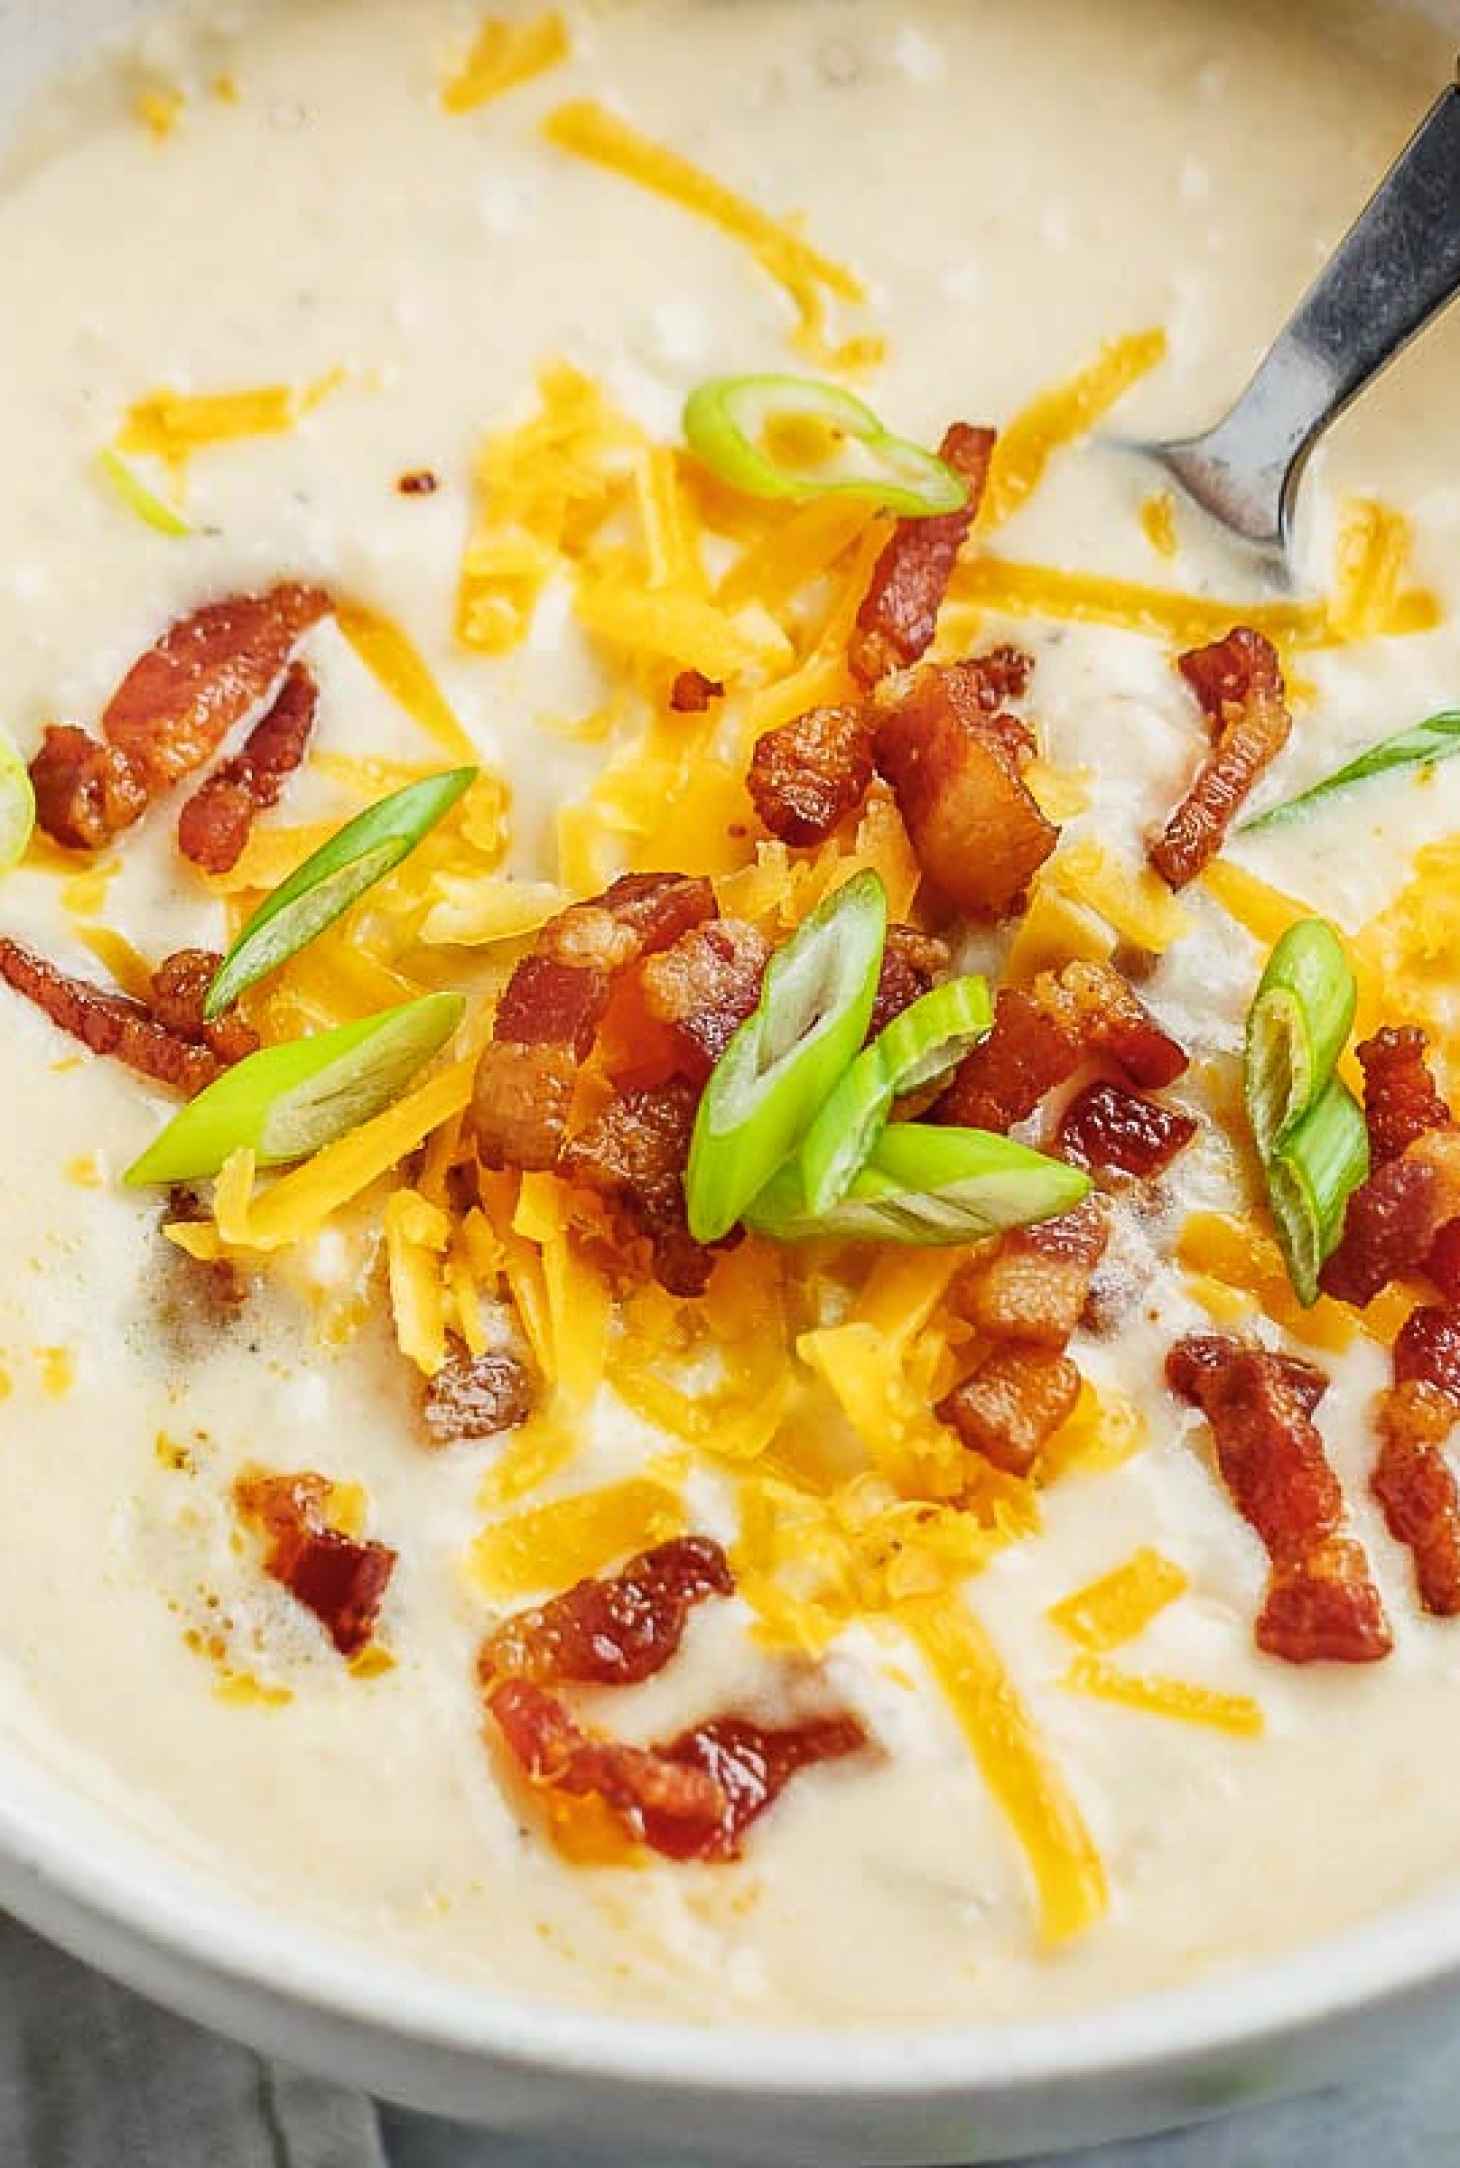 Instant-Pot Creamy Potato Soup - #recipe by #eatwell101 - https://www.eatwell101.com/instant-pot-creamy-potato-soup-recipe